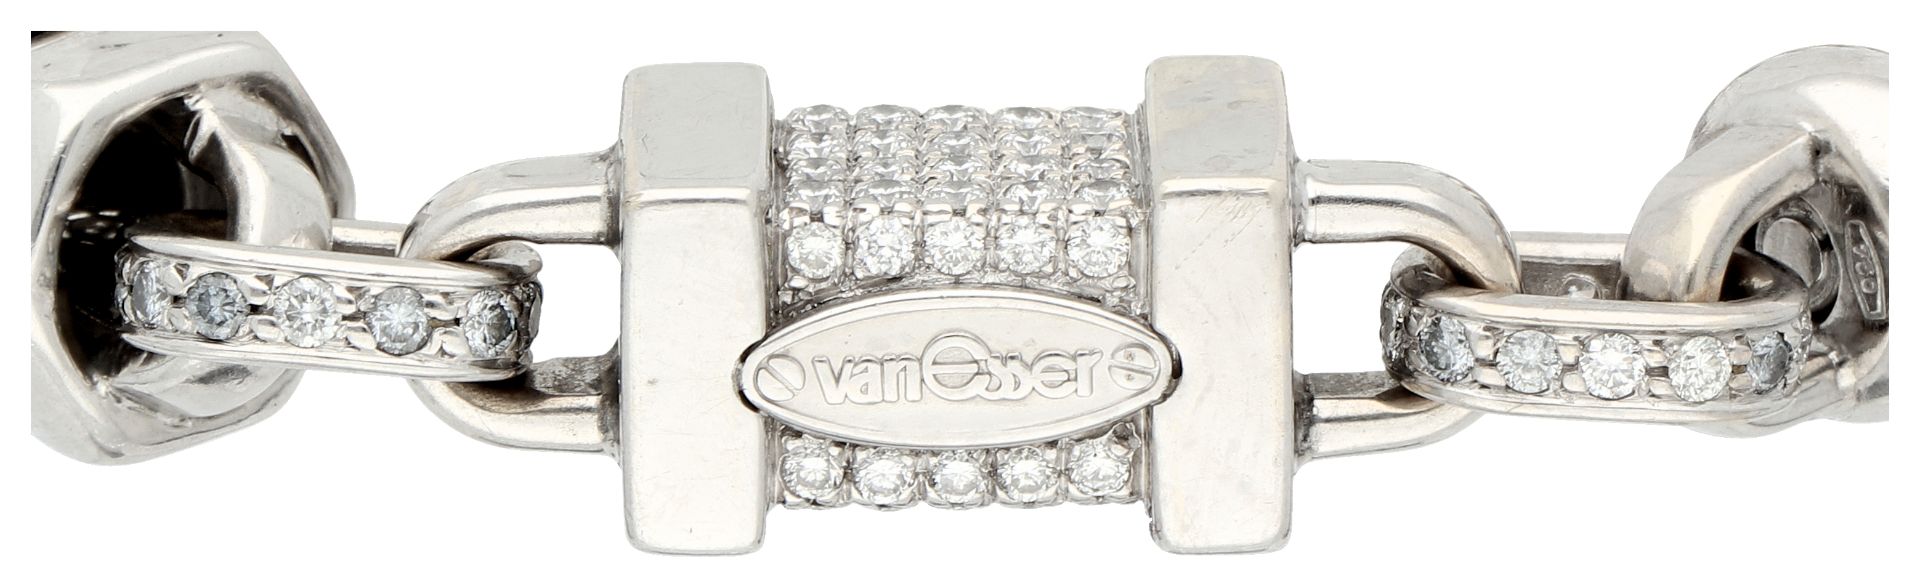 No Reserve - Van Esser 18K white gold link bracelet set with approx. 0.56 ct. diamond. - Bild 2 aus 4